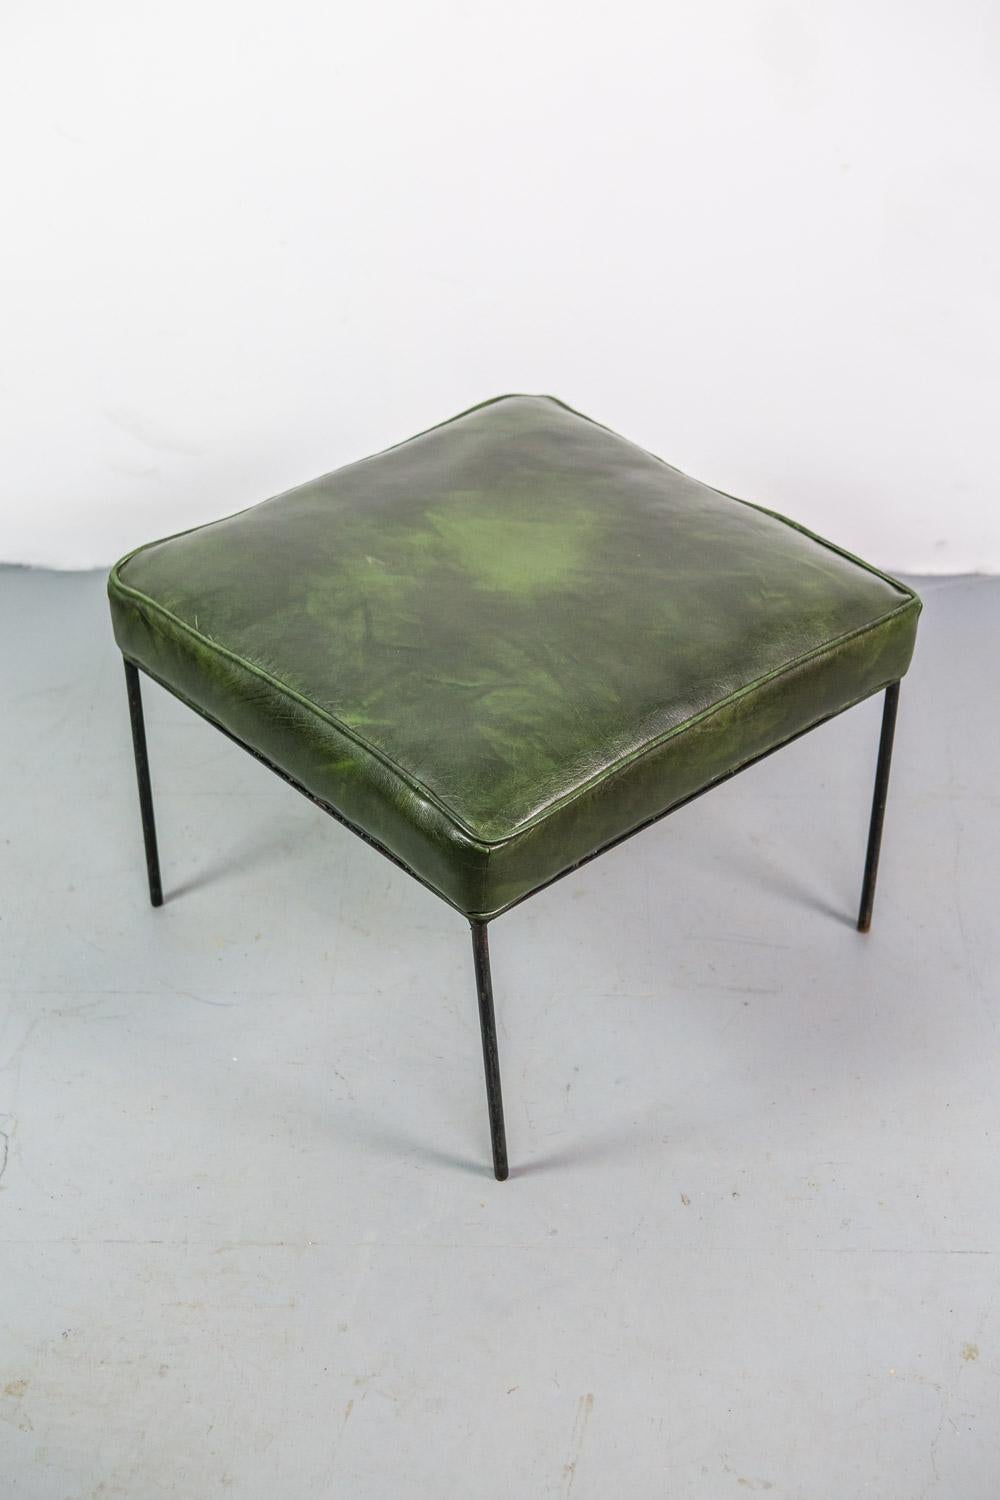 Original Paul McCobb Iron stool with vinyl seating surface in green skai upholstery.